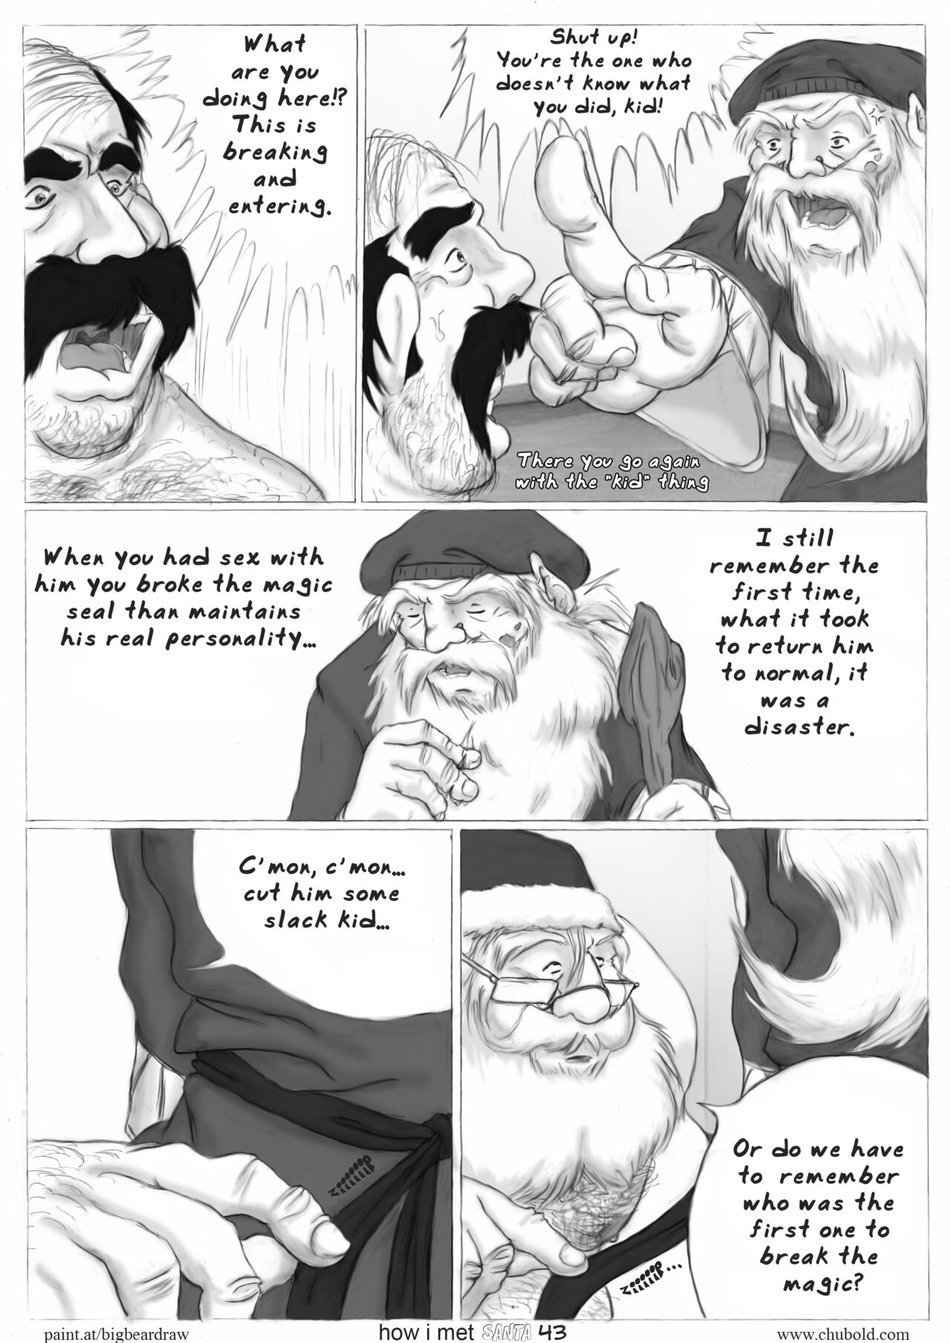 Rafael Fernández CrazyLove BigBearDraw How I Met Santa